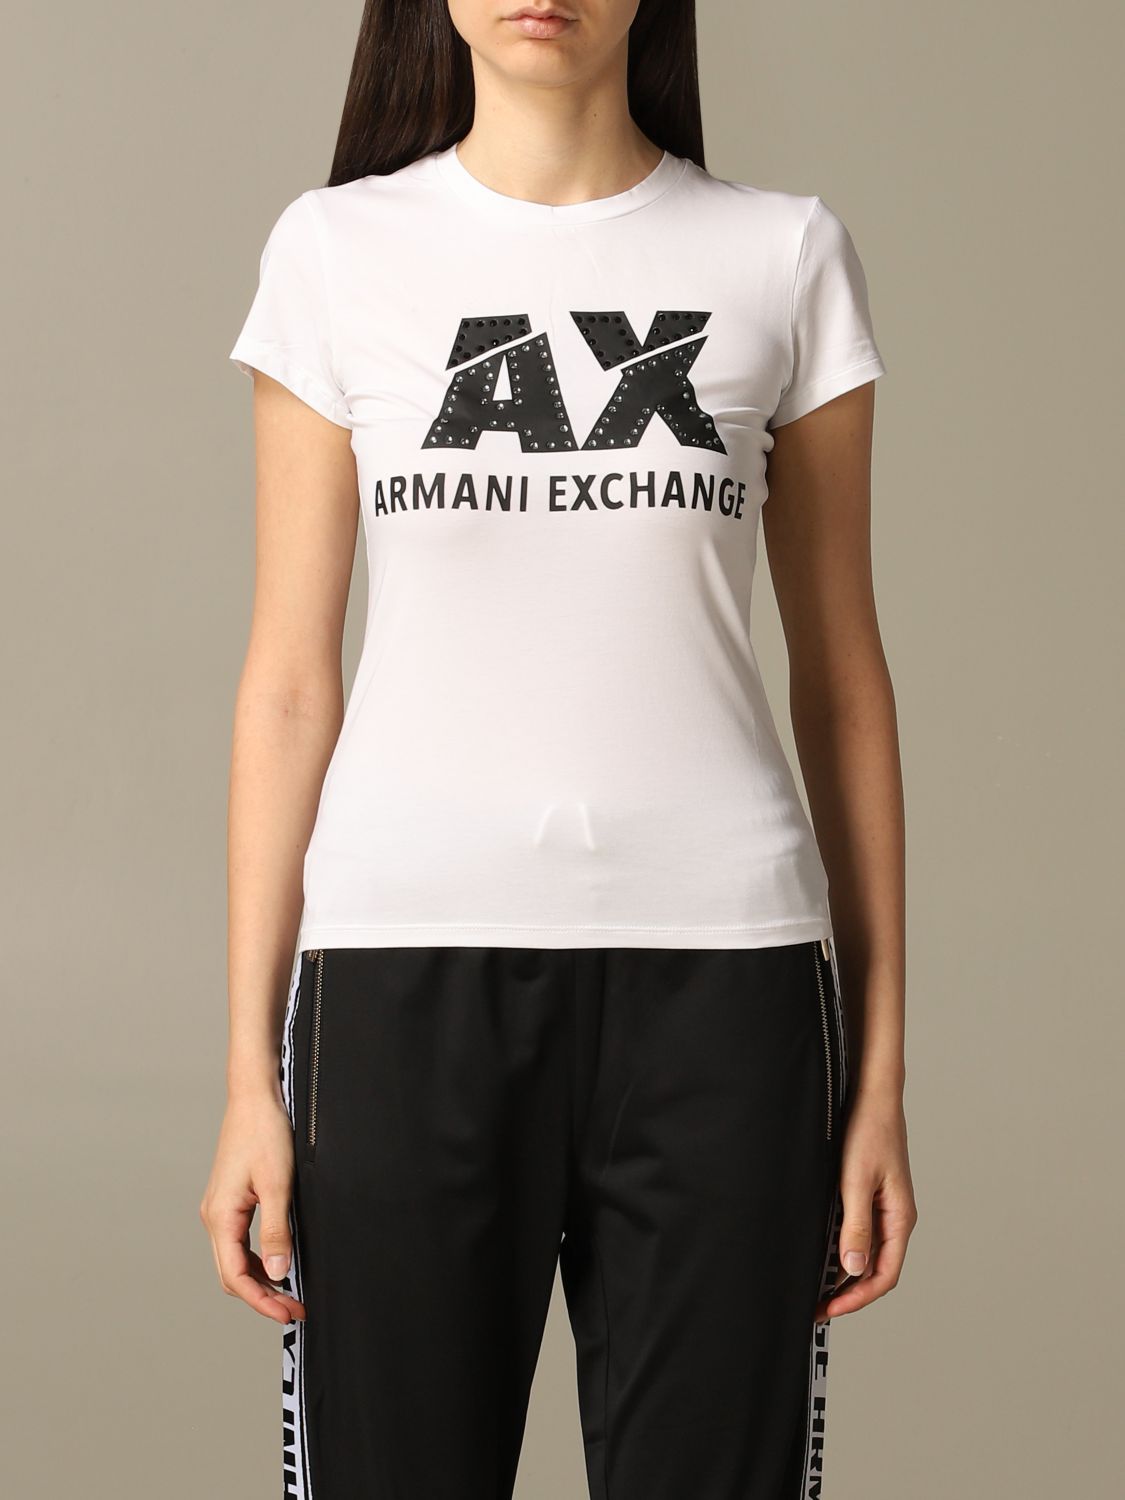 Armani Exchange t-shirt with rhinestone 